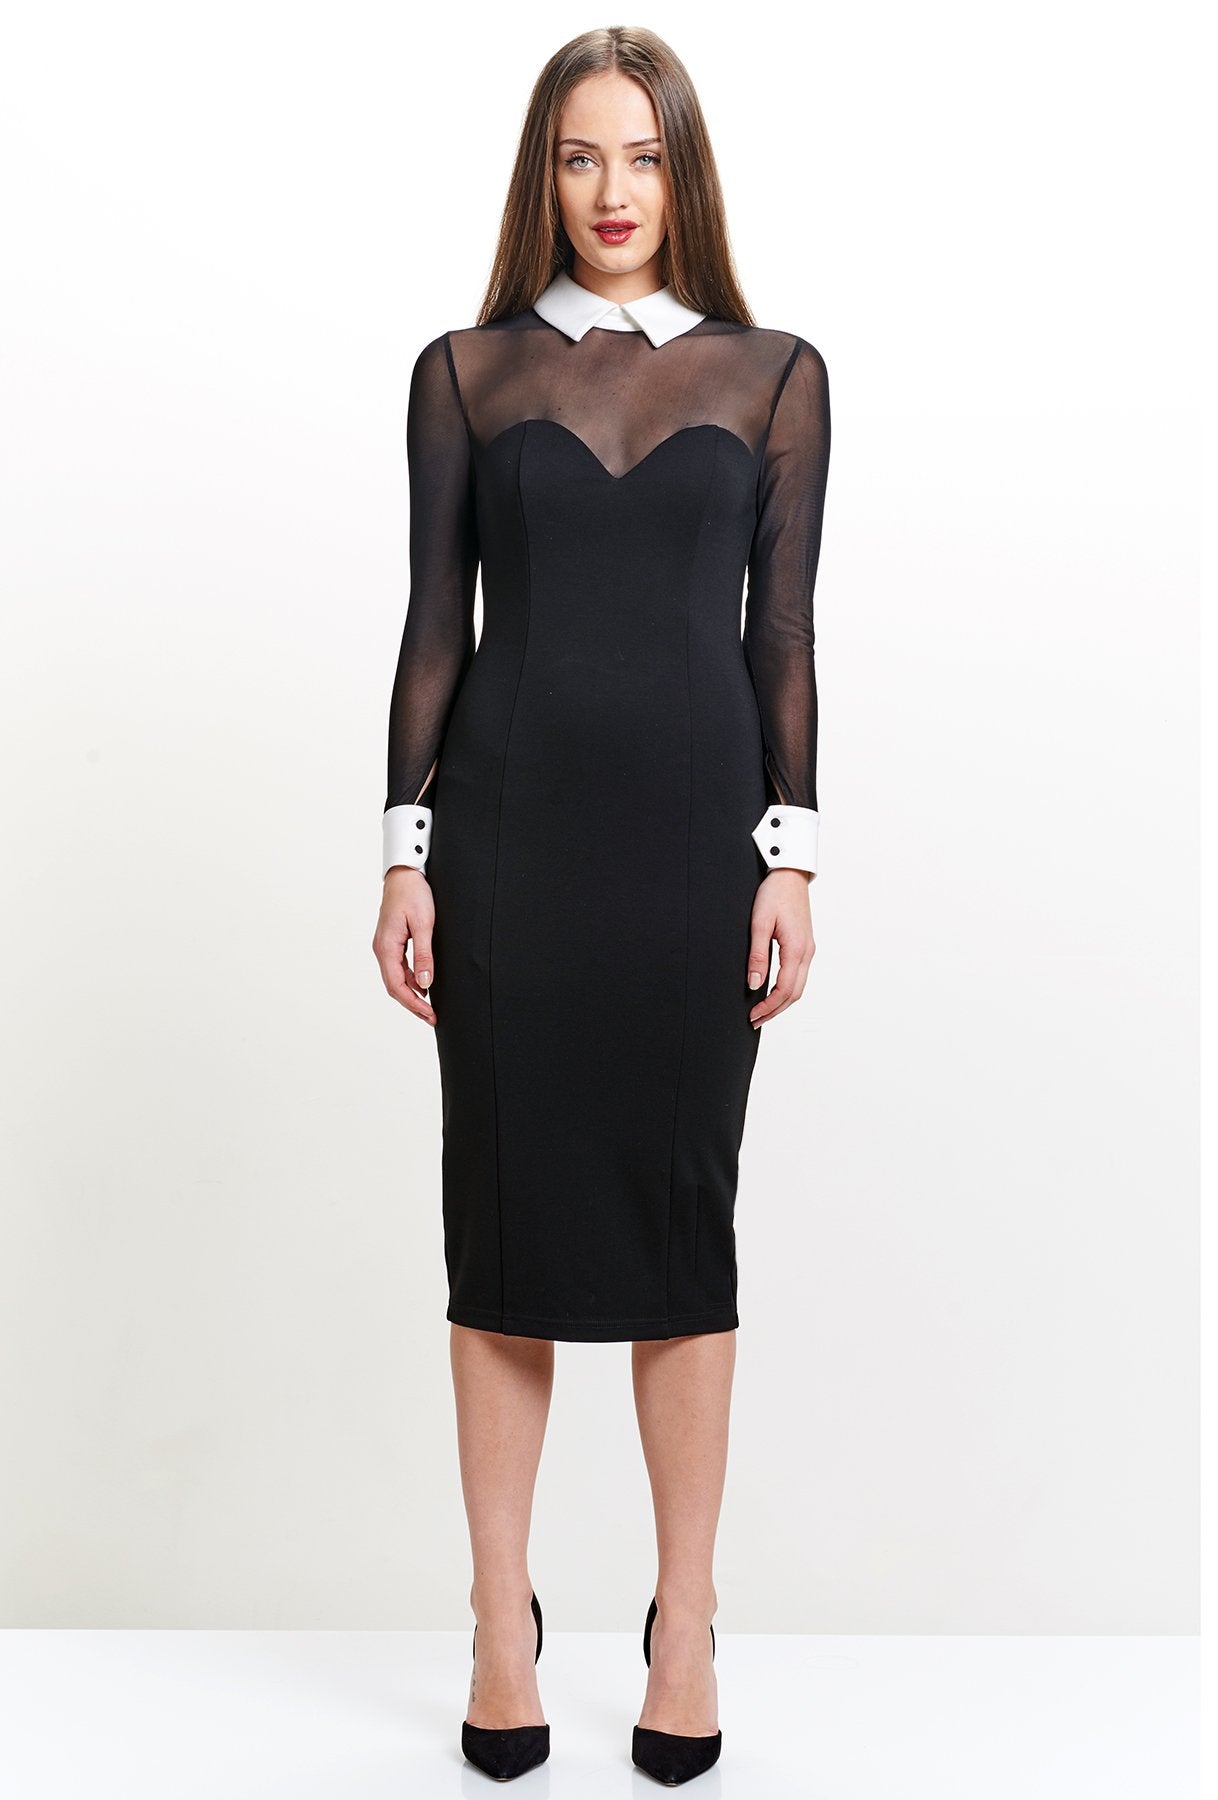 Tuxedo Illusion Dress - Midi dress with mesh sleeves, & contrast - Walbiz.com